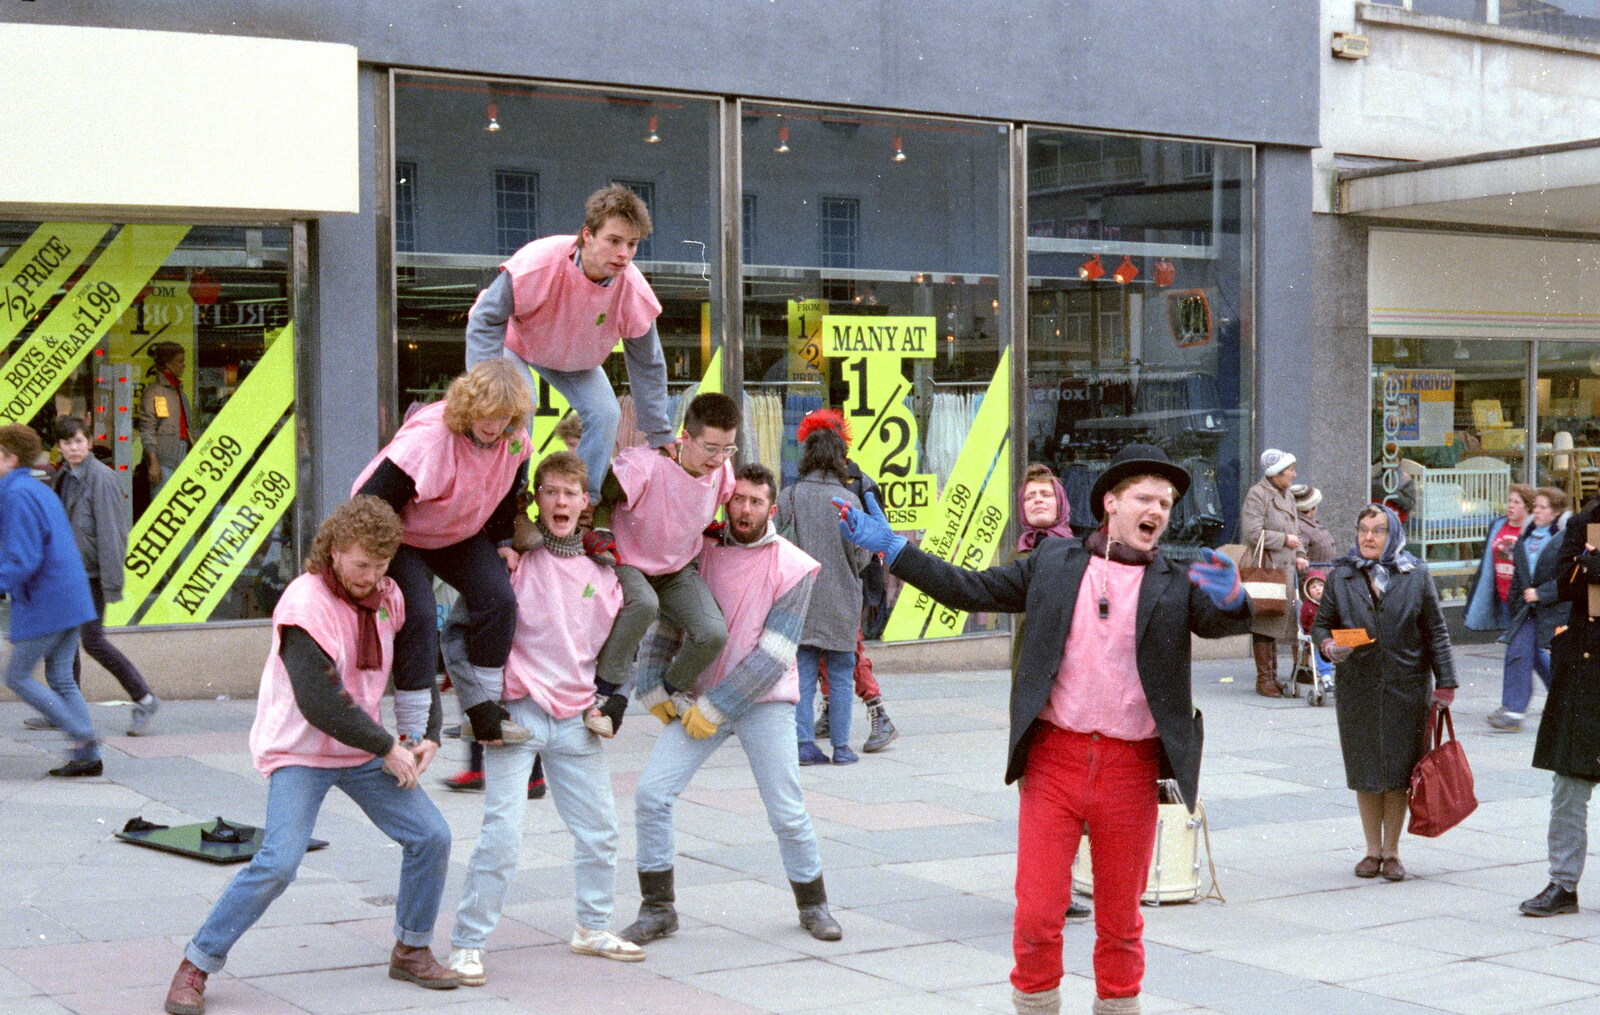 Ta-da! The human pyramid is ready from Uni: A Van Gogh Grant Cuts Protest, Plymouth, Devon - 1st March 1986